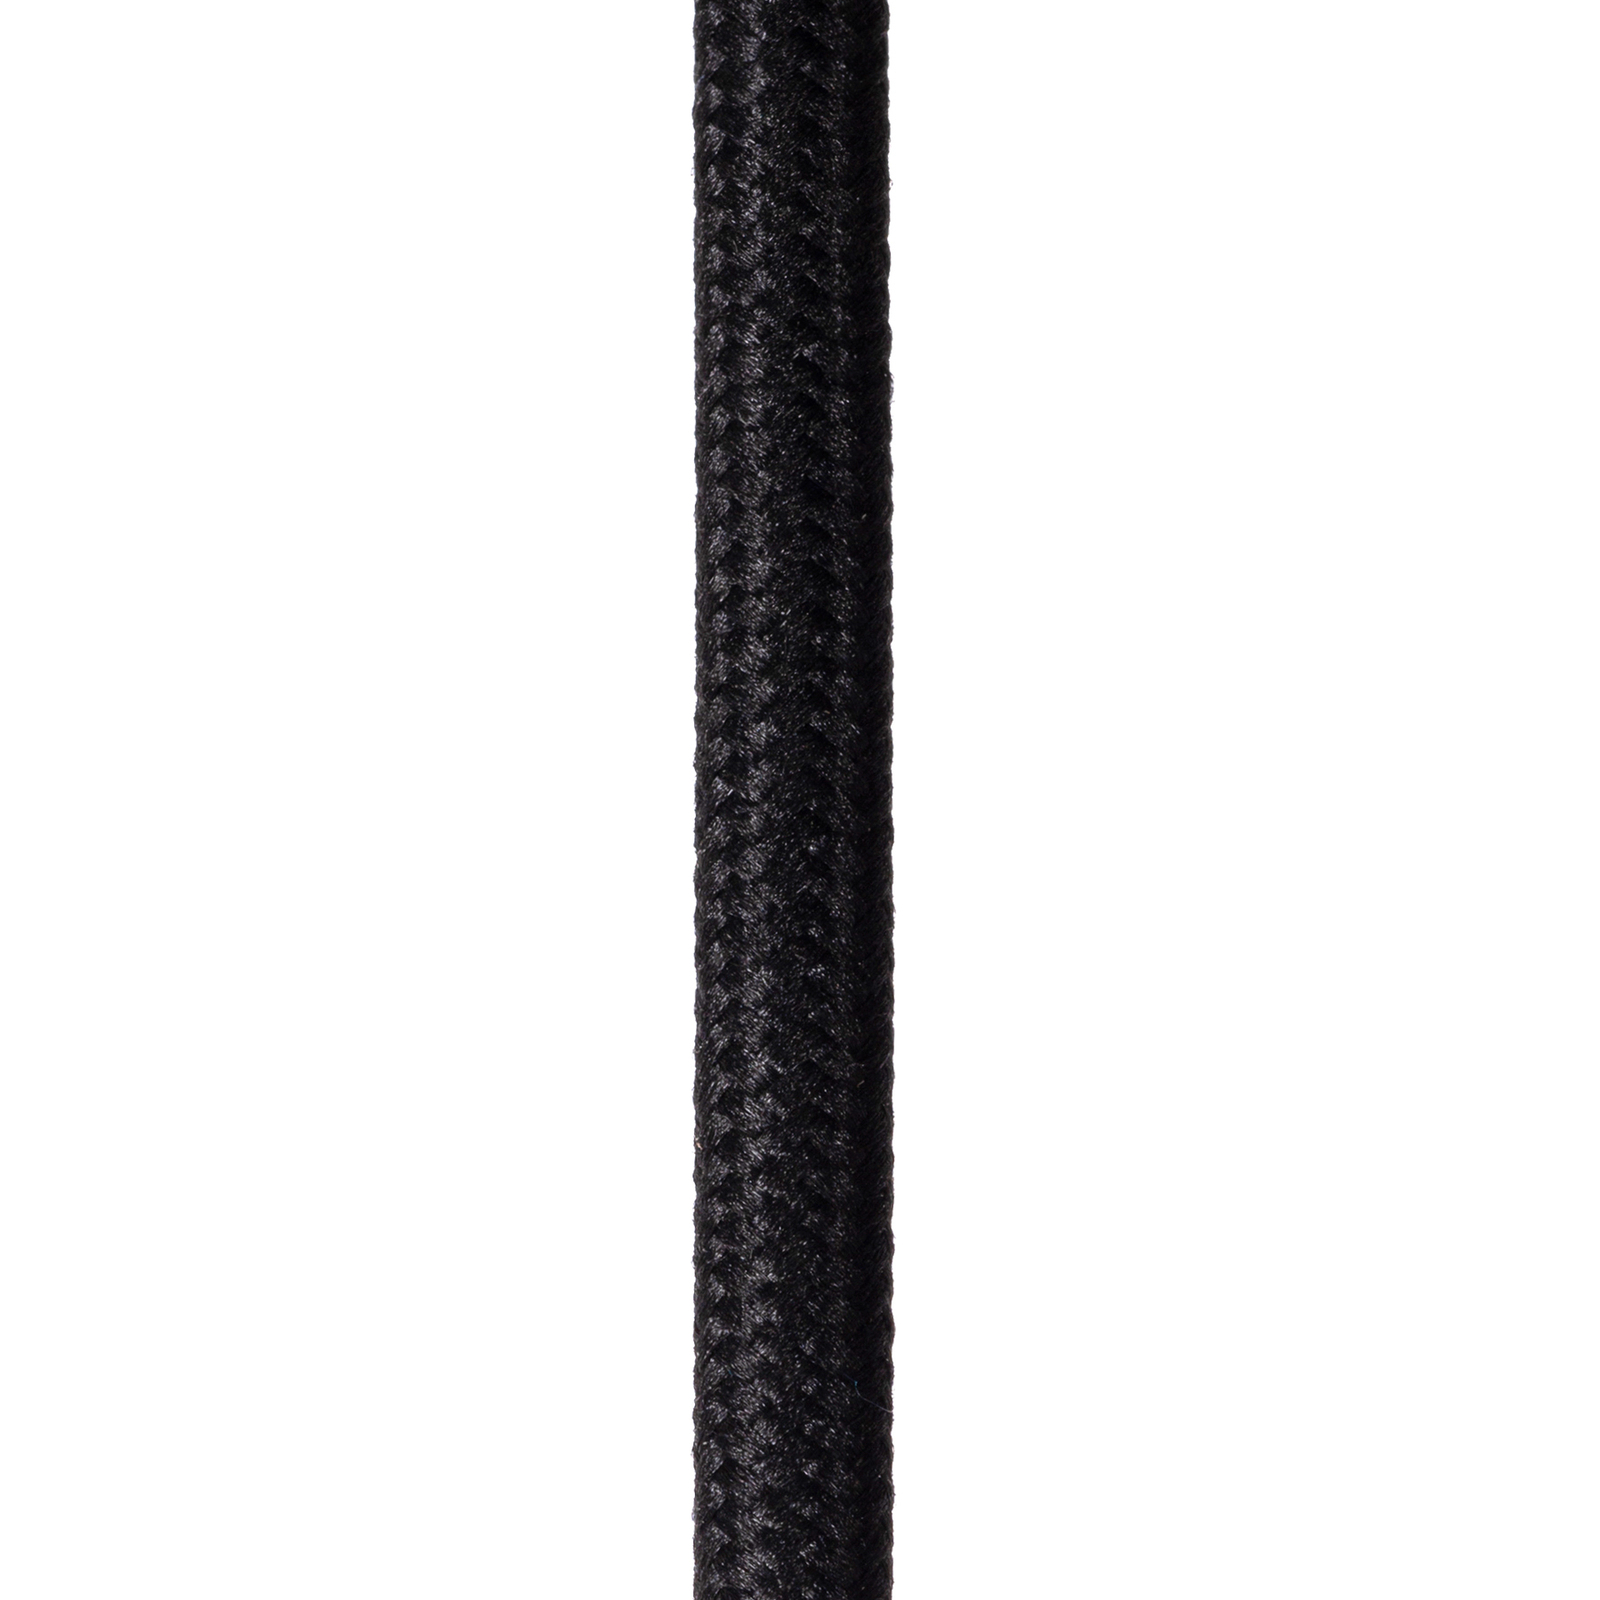 Siemon pendant light made of steel Ø 40 cm black